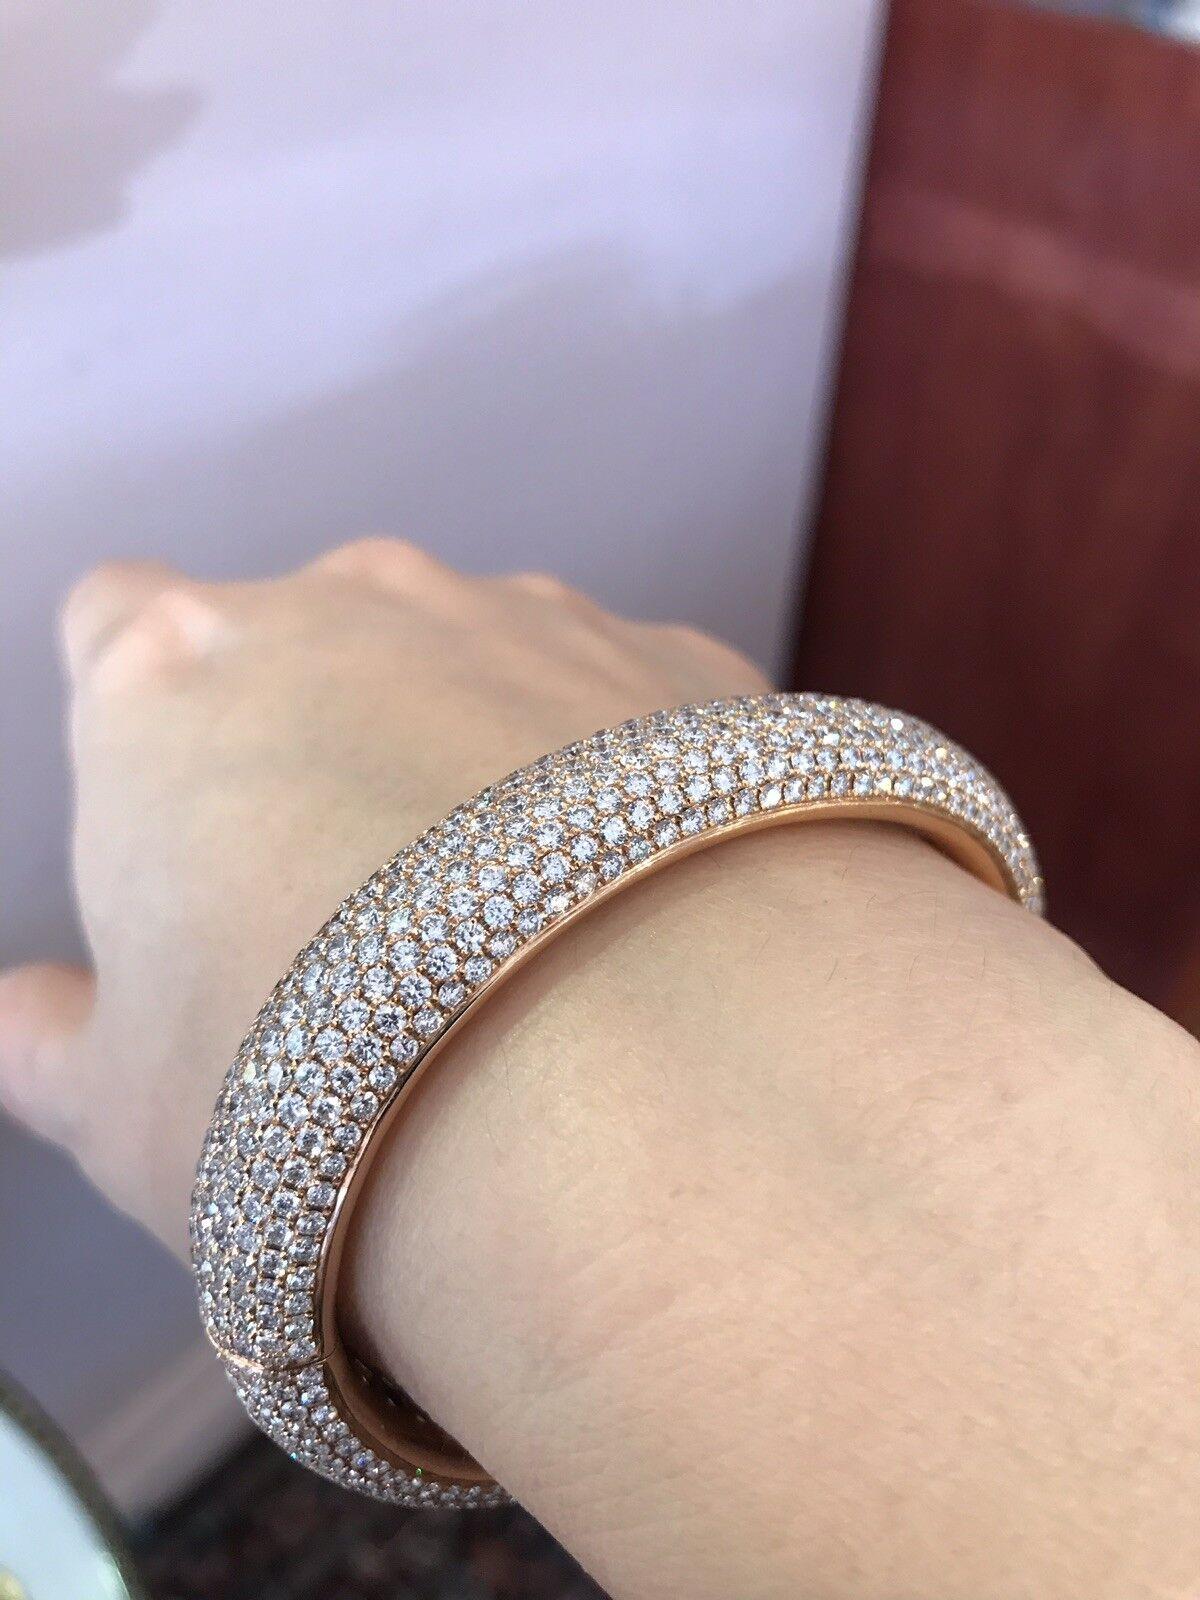 24.25 Carats Diamond Pave Bangle Bracelet in 18k Rose Gold For Sale 1